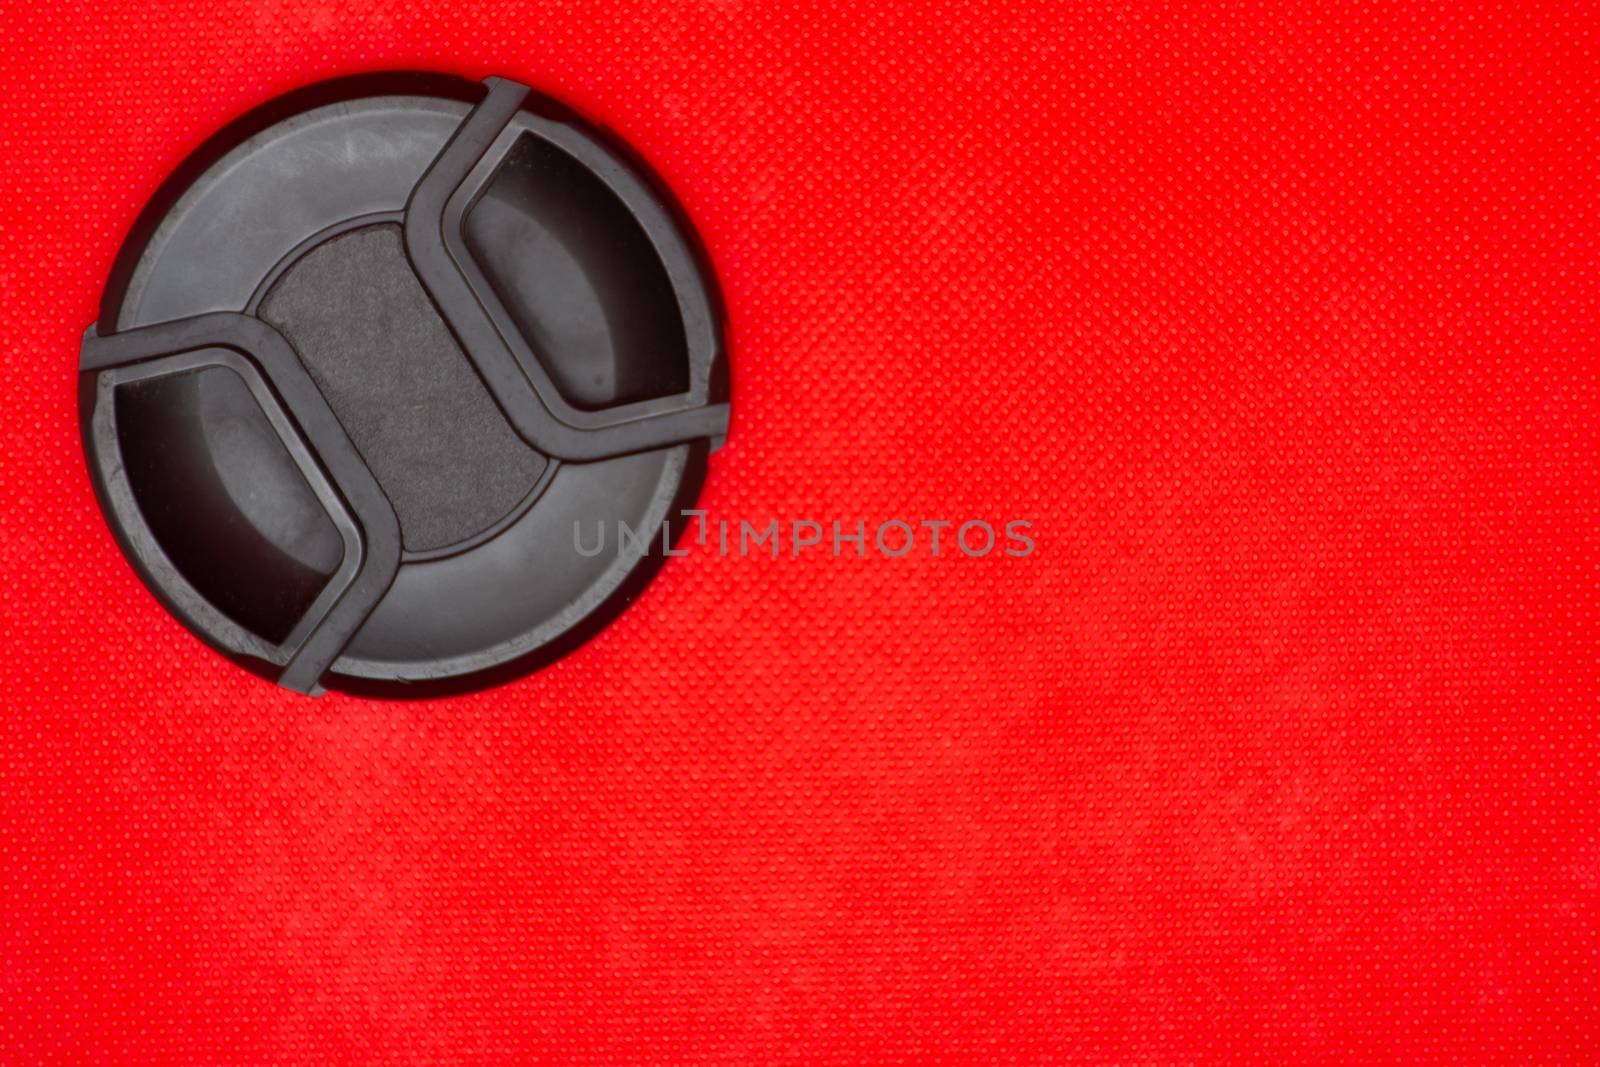 Close up of a black circle lens cap top left corner for DSLR camera lens on a rich red background.